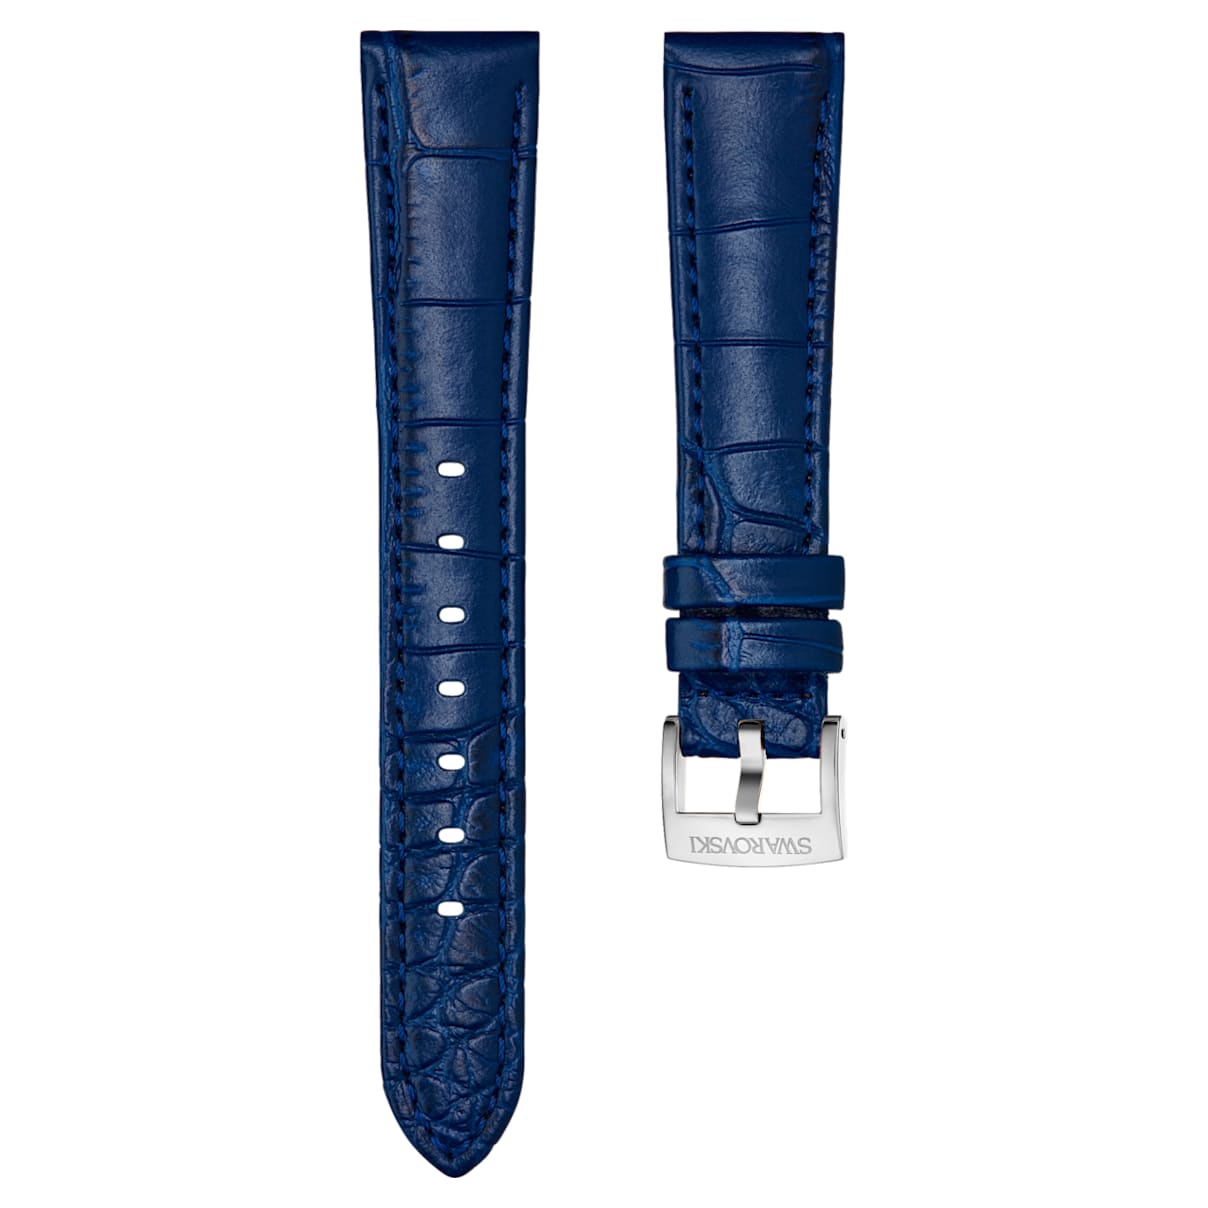 Cinturino per orologio 17mm, pelle con impunture, blu, acciaio inossidabile